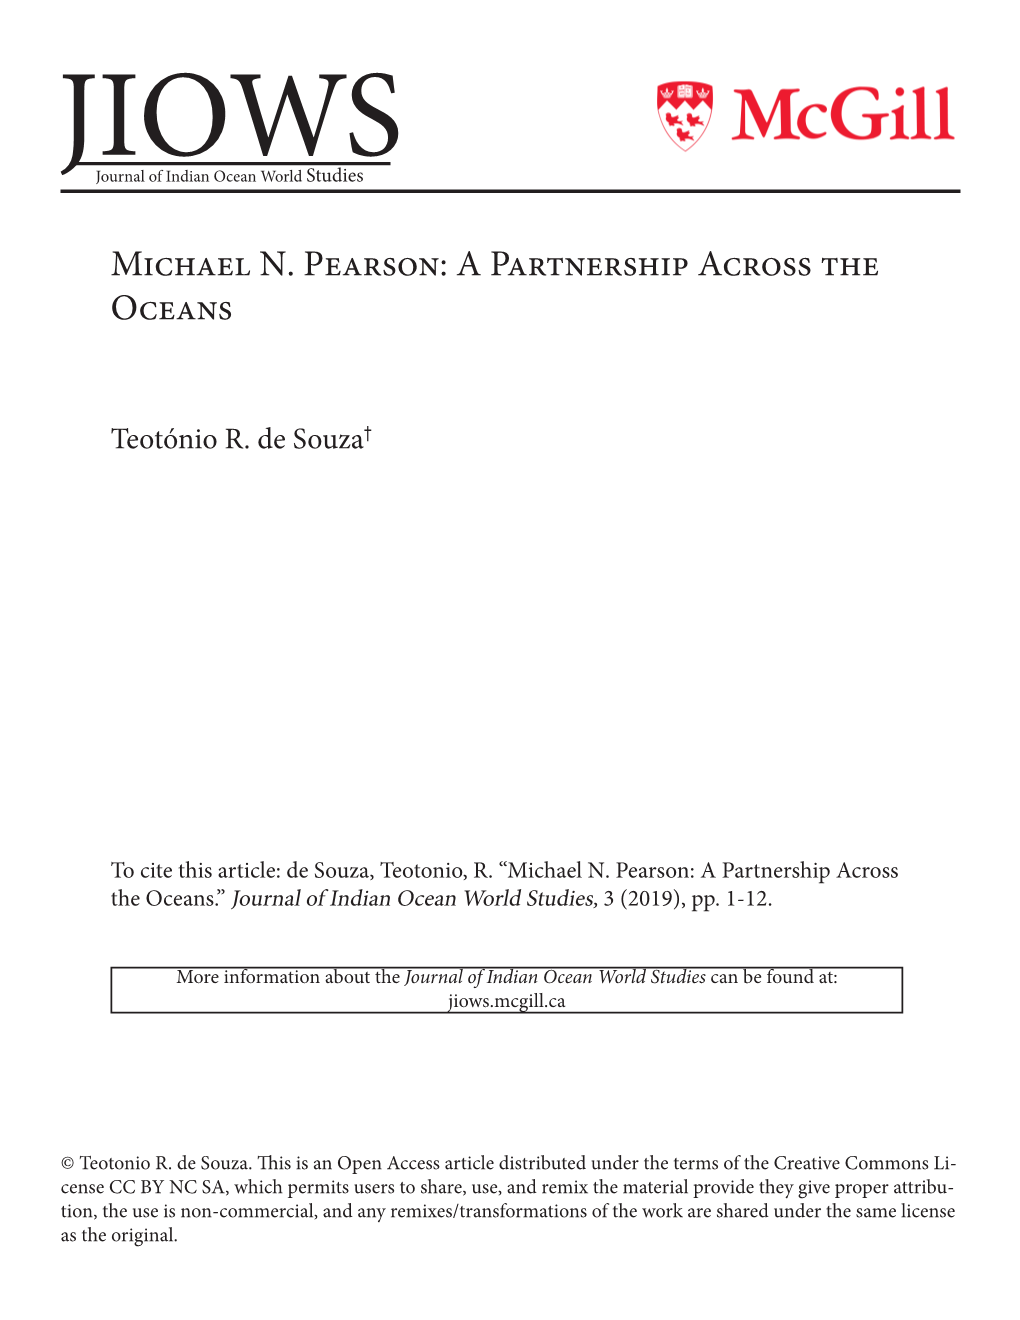 Michael N. Pearson: a Partnership Across the Oceans